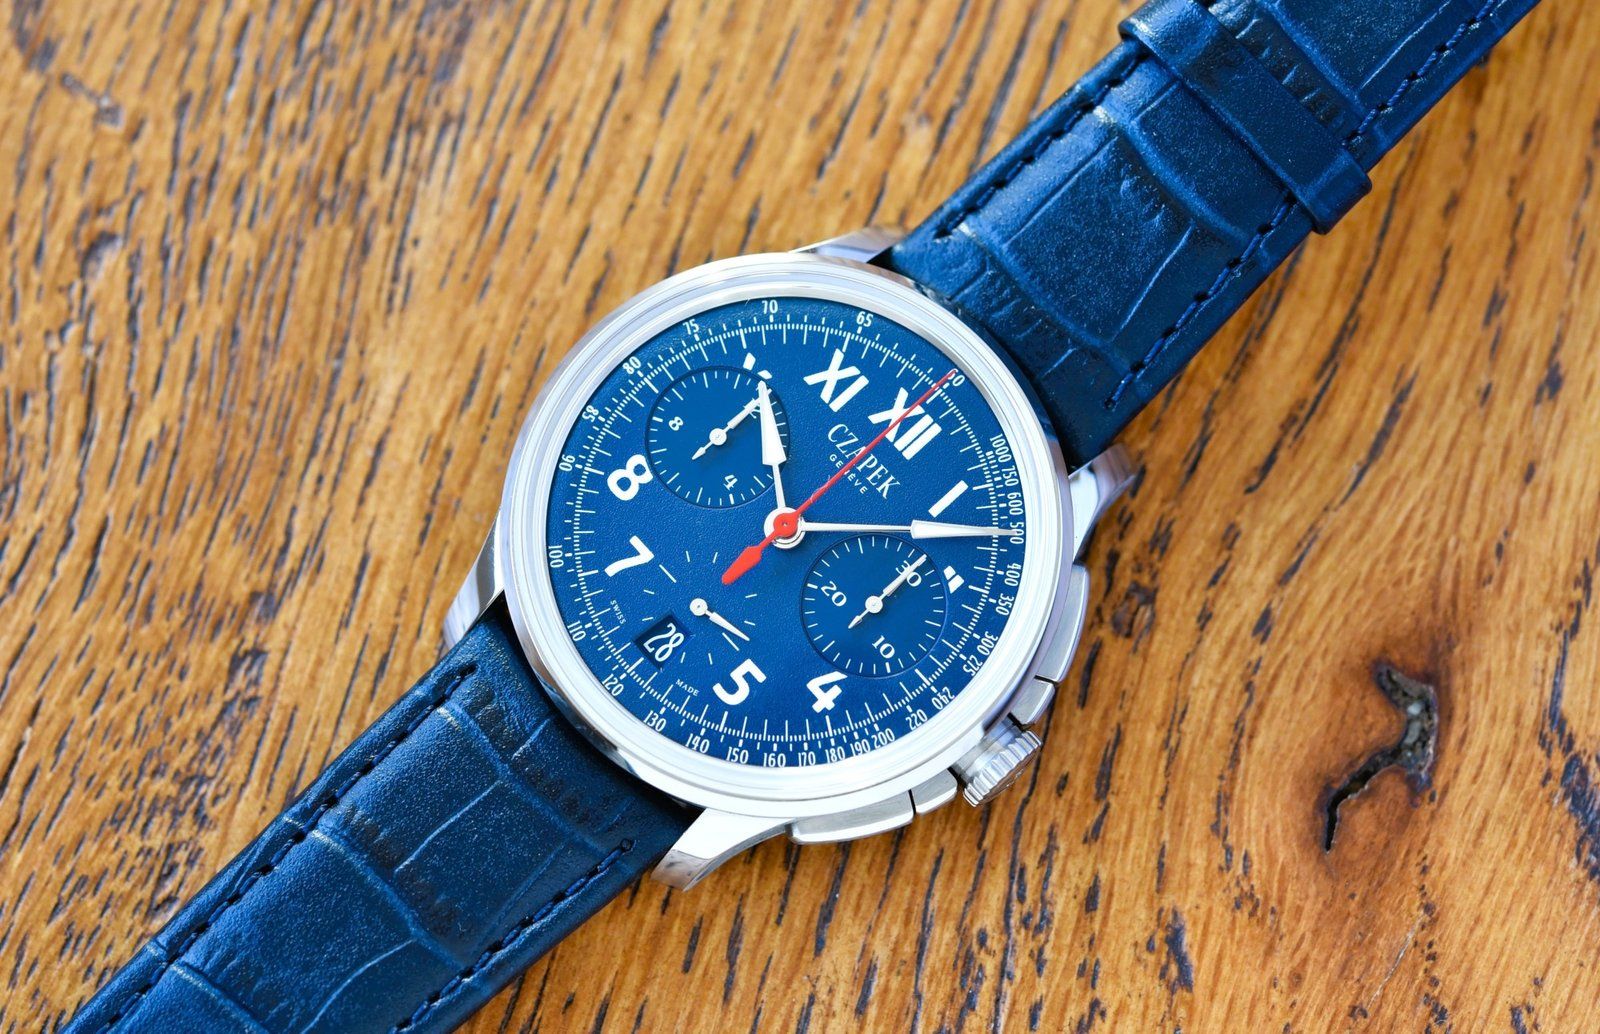 The California Blue features a deep and intense blue grainé dial